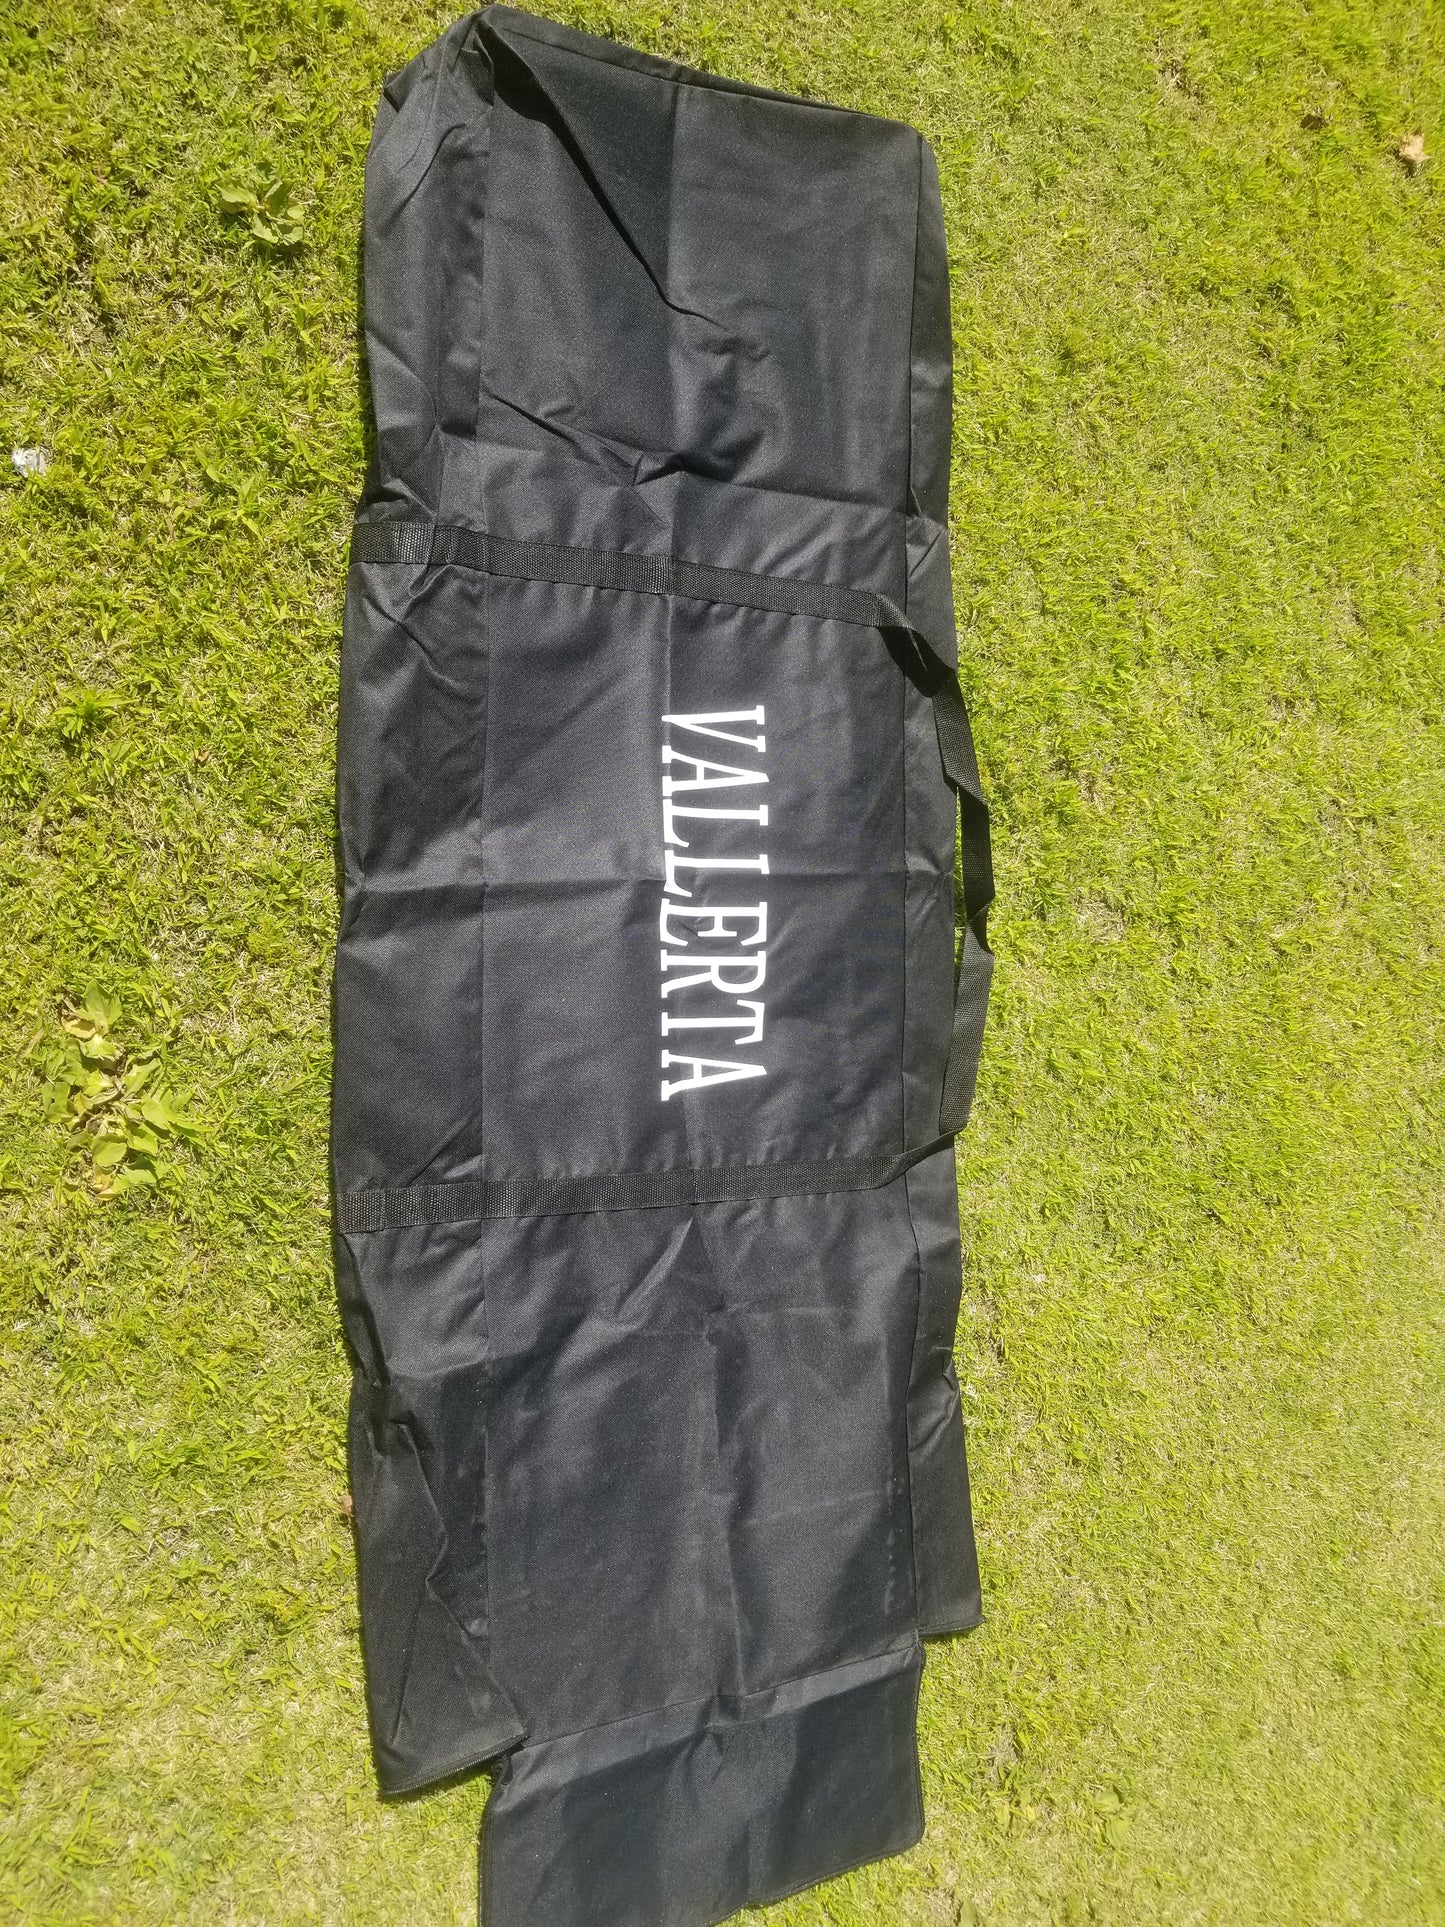 Vallerta® 10 X 6 Ft. PVC Soccer Goal w/Carry Bag & Weatherproof Net